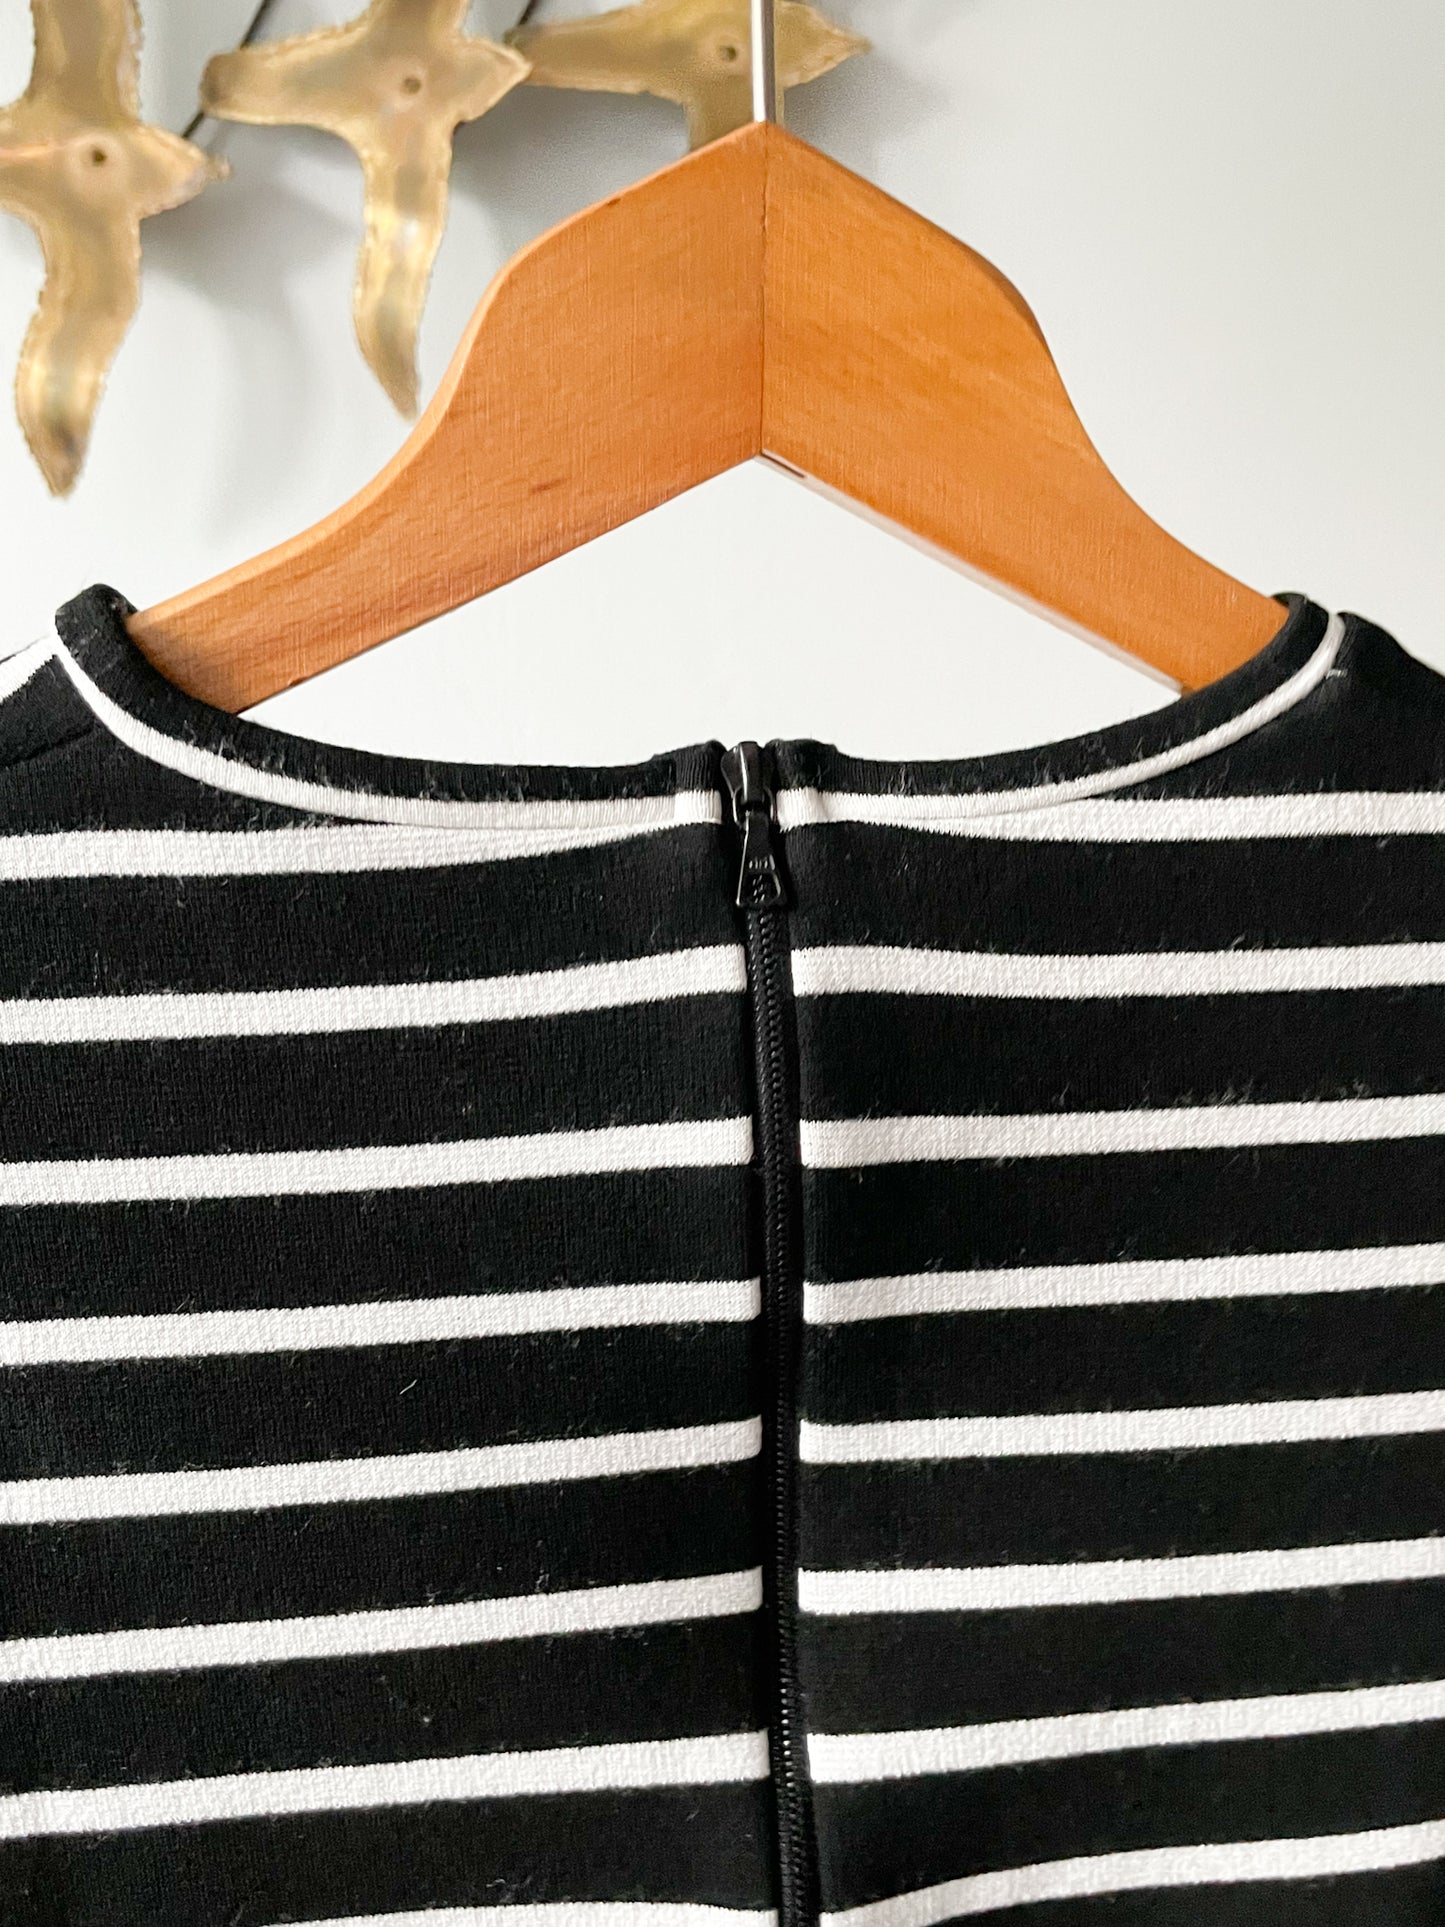 Judith & Charles Black Stripe Half Sleeve Cropped Knit Top - XS/S